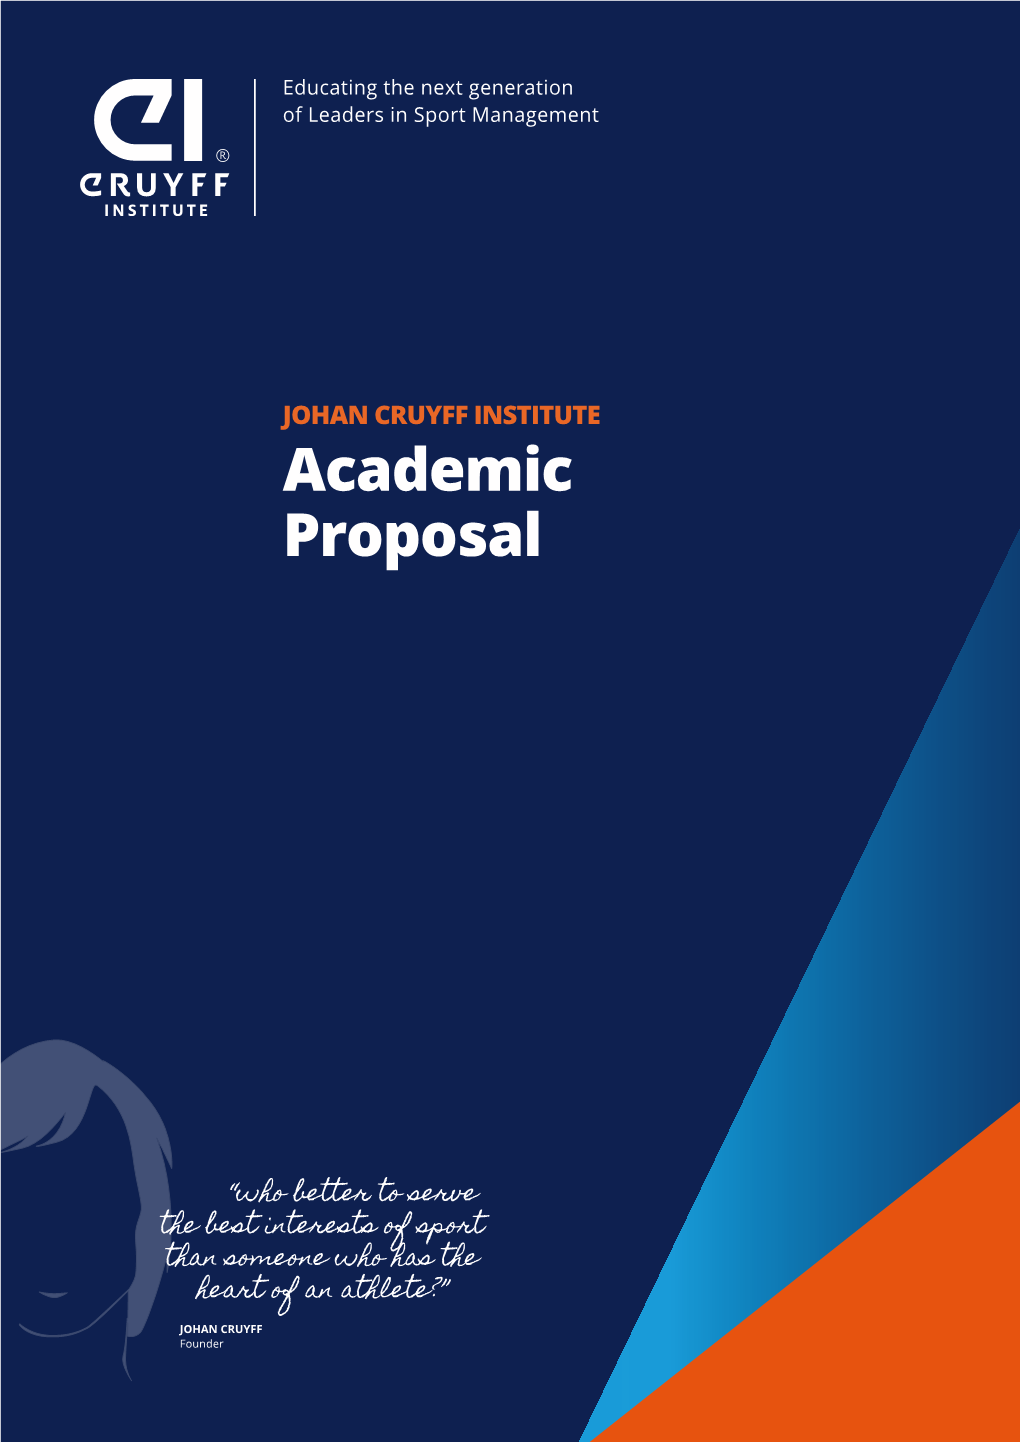 Academic Proposal JOHAN CRUYFF INSTITUTE